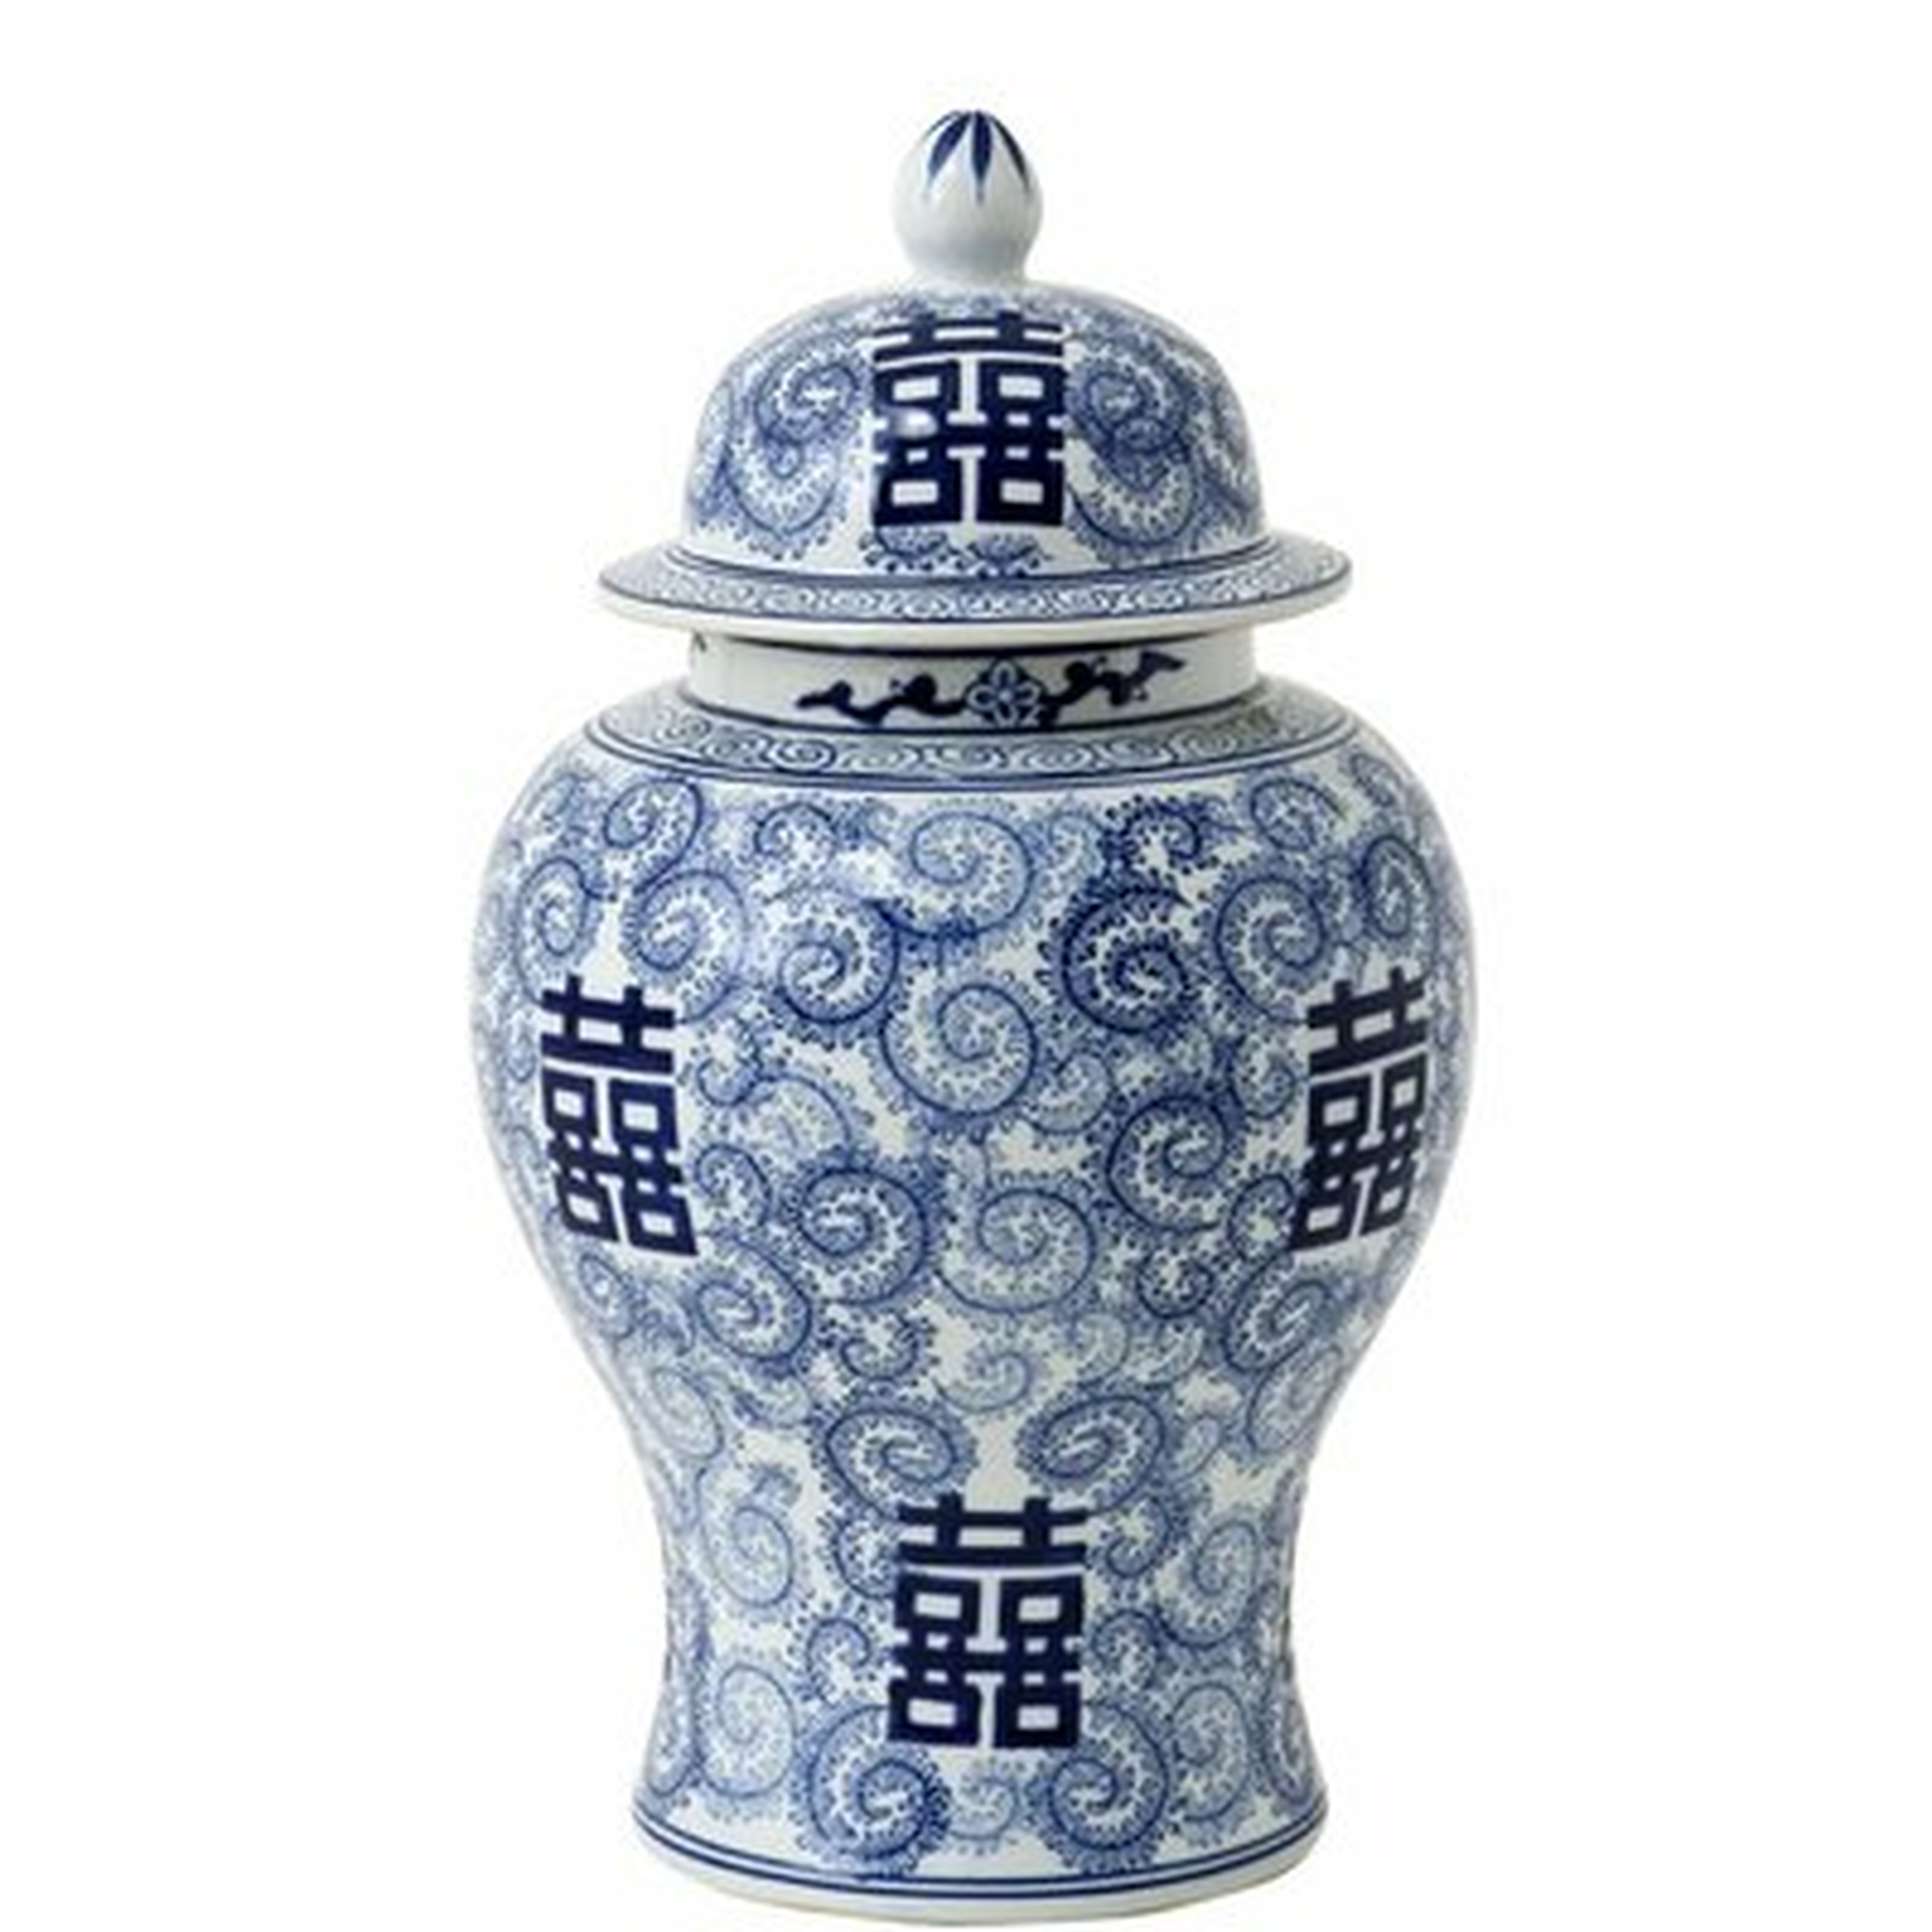 Chinese Glamour Urns and Jars - Wayfair